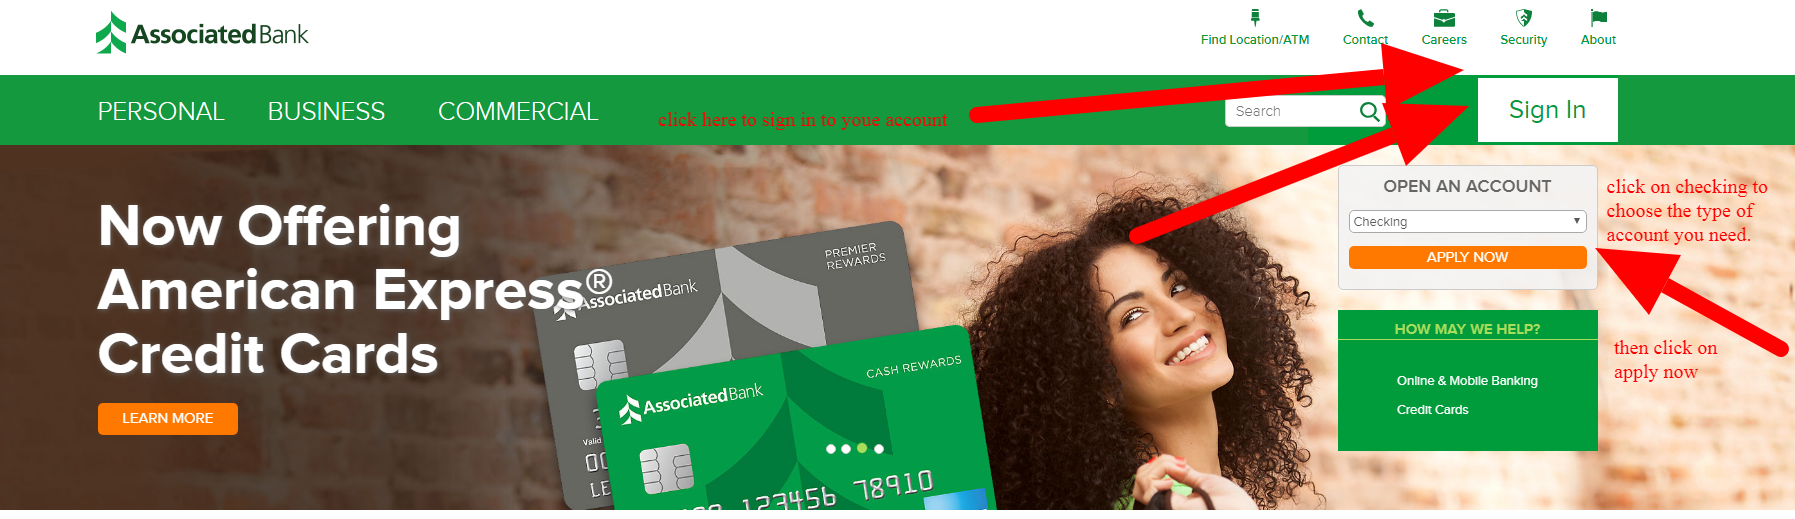 log in to associated bank visa signature bonus rewards card account